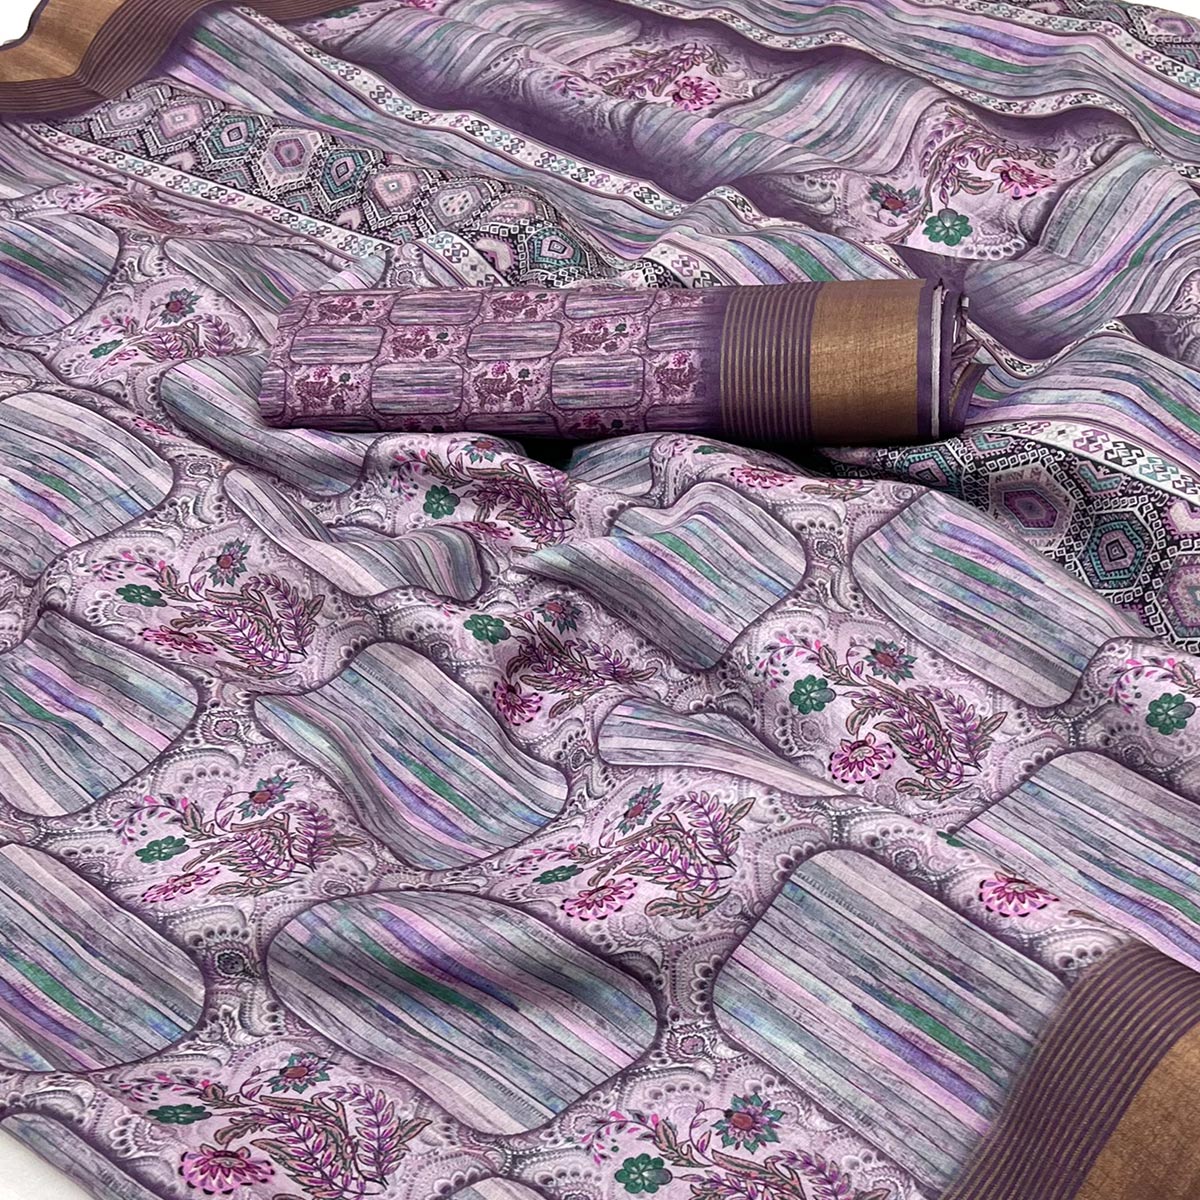 Purple Digital Printed With Woven Border Cotton Silk Saree